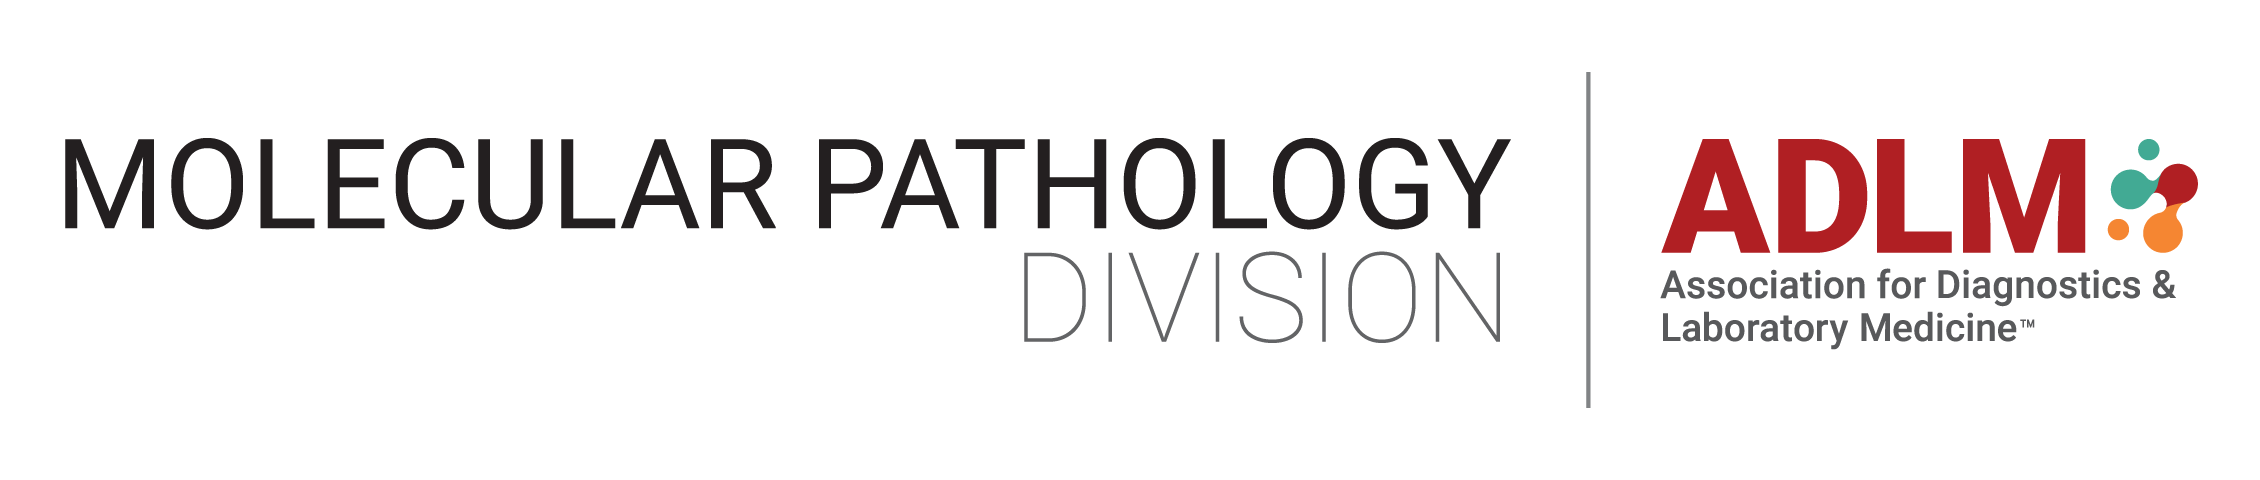 MOLPATH Division Logo